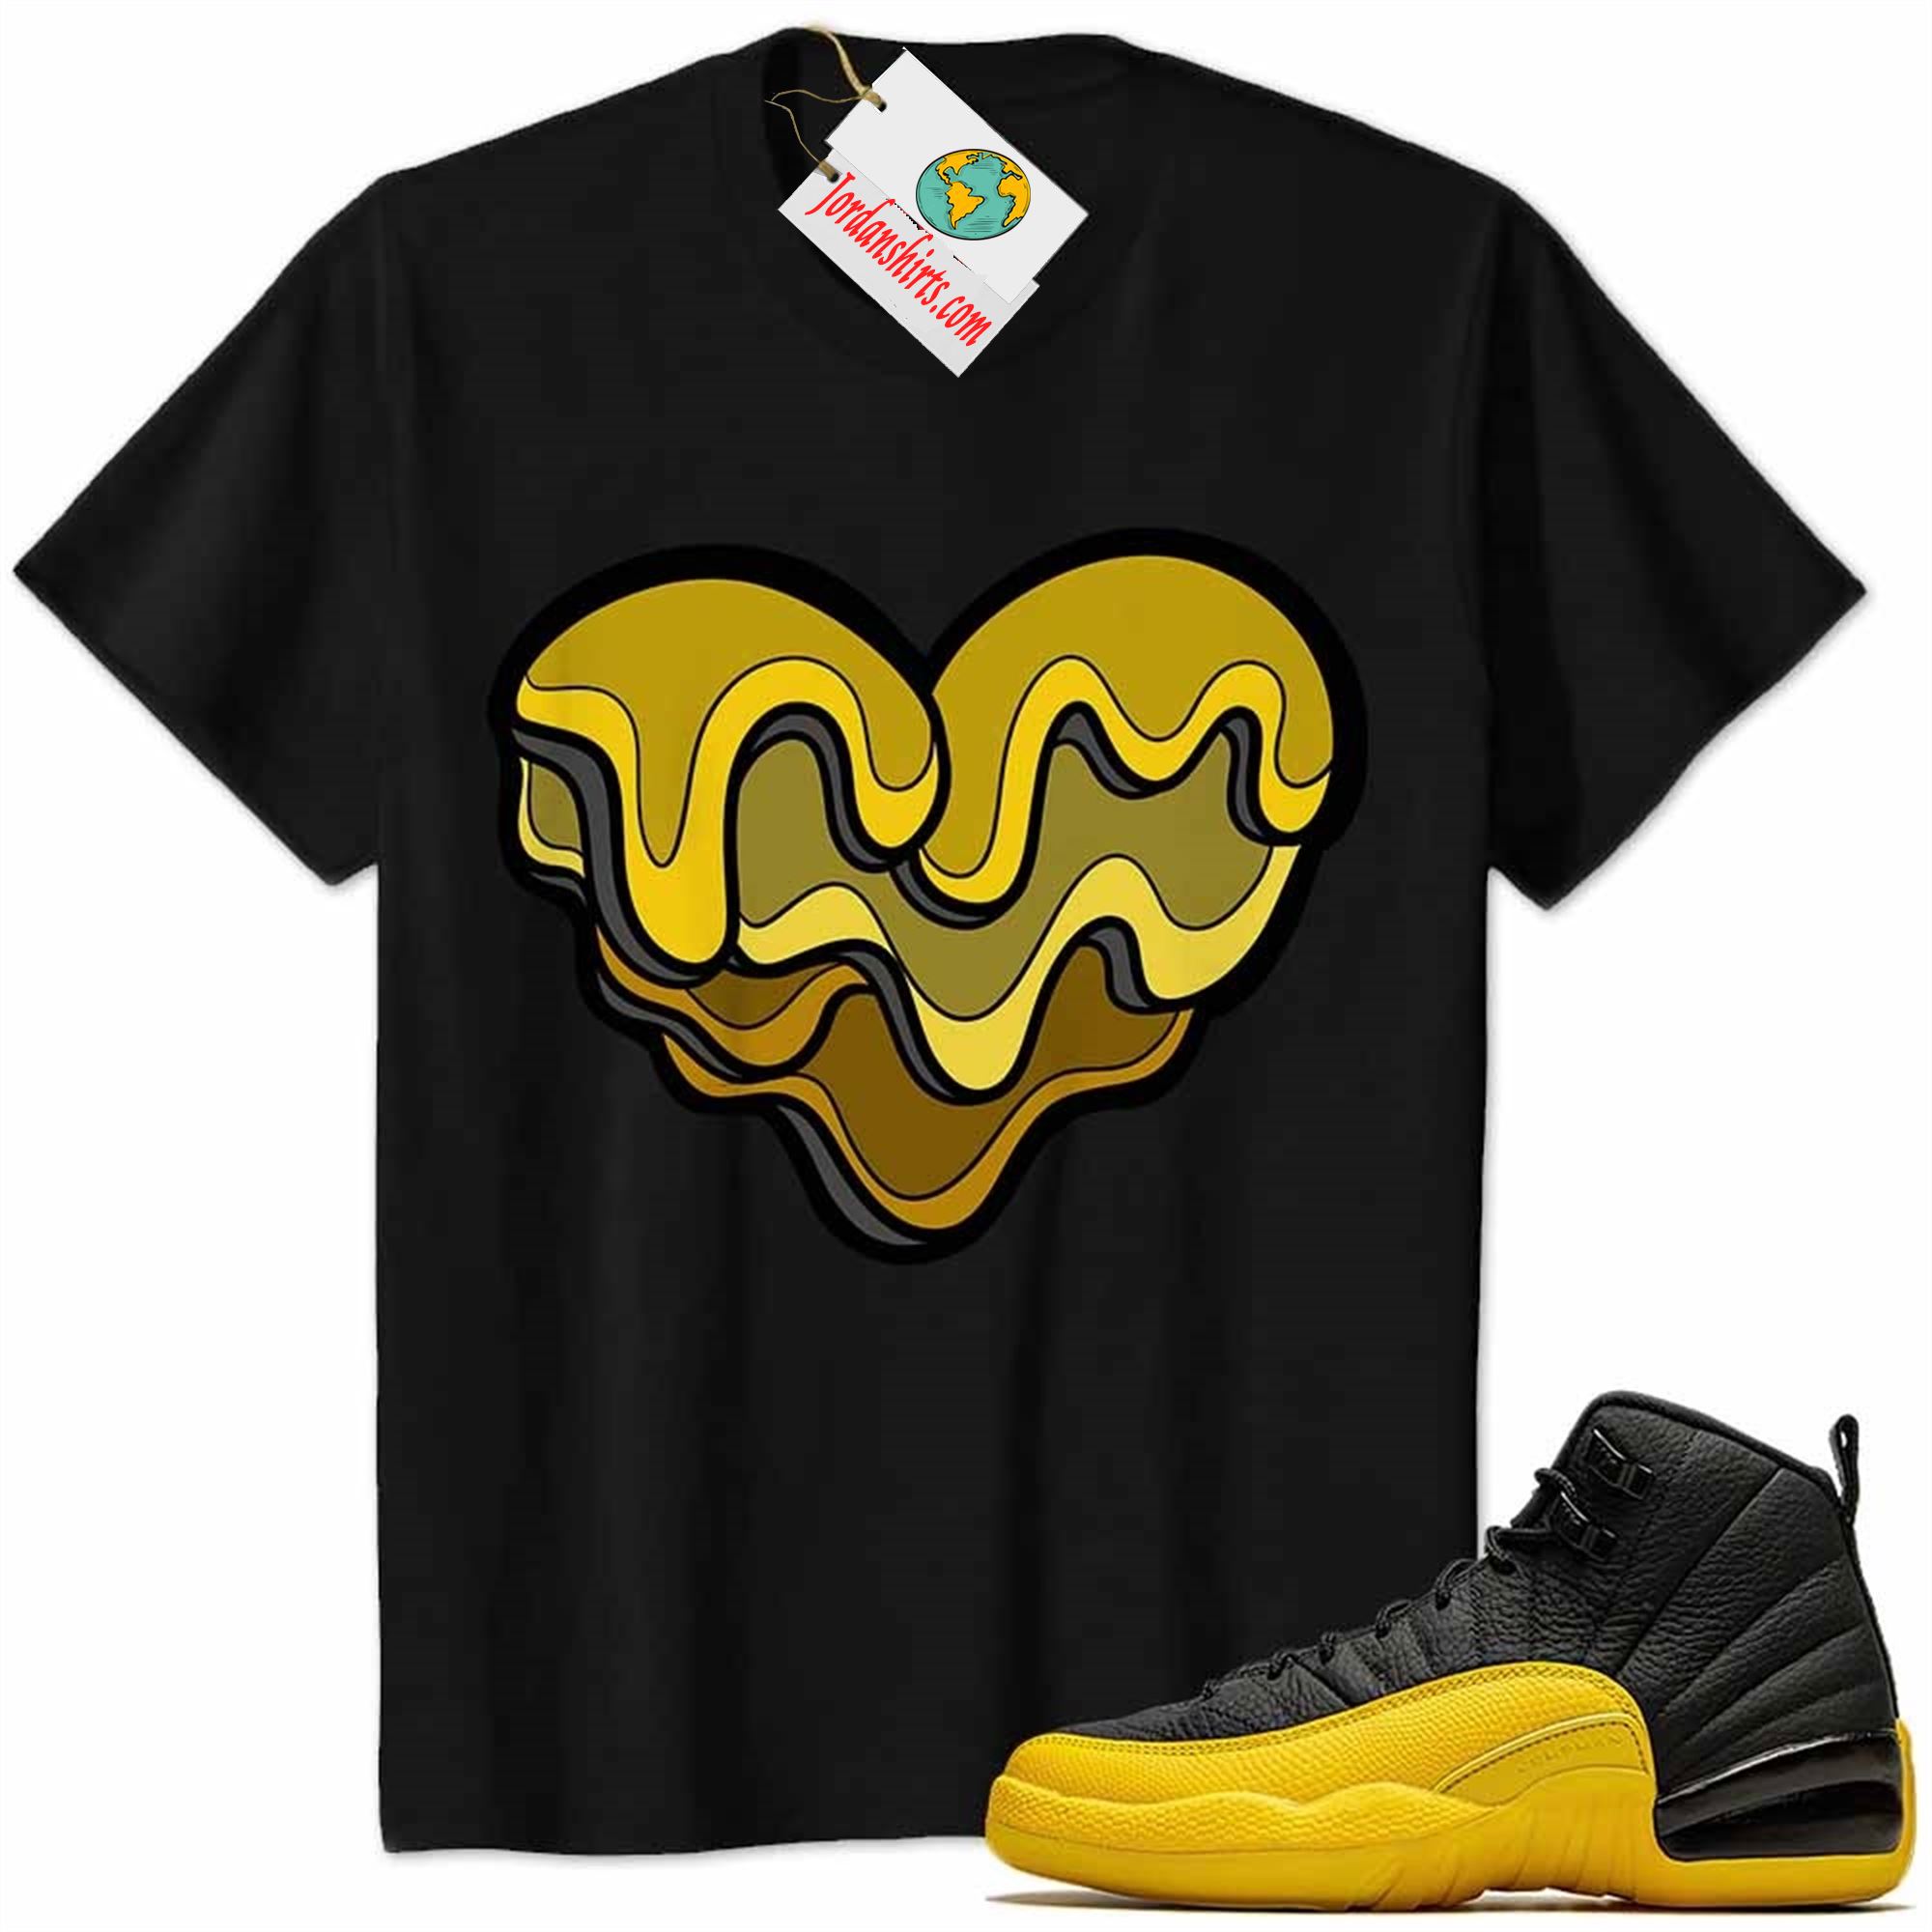 Jordan 12 Shirt, Melt Dripping Heart Black Air Jordan 12 University Gold 12s Full Size Up To 5xl